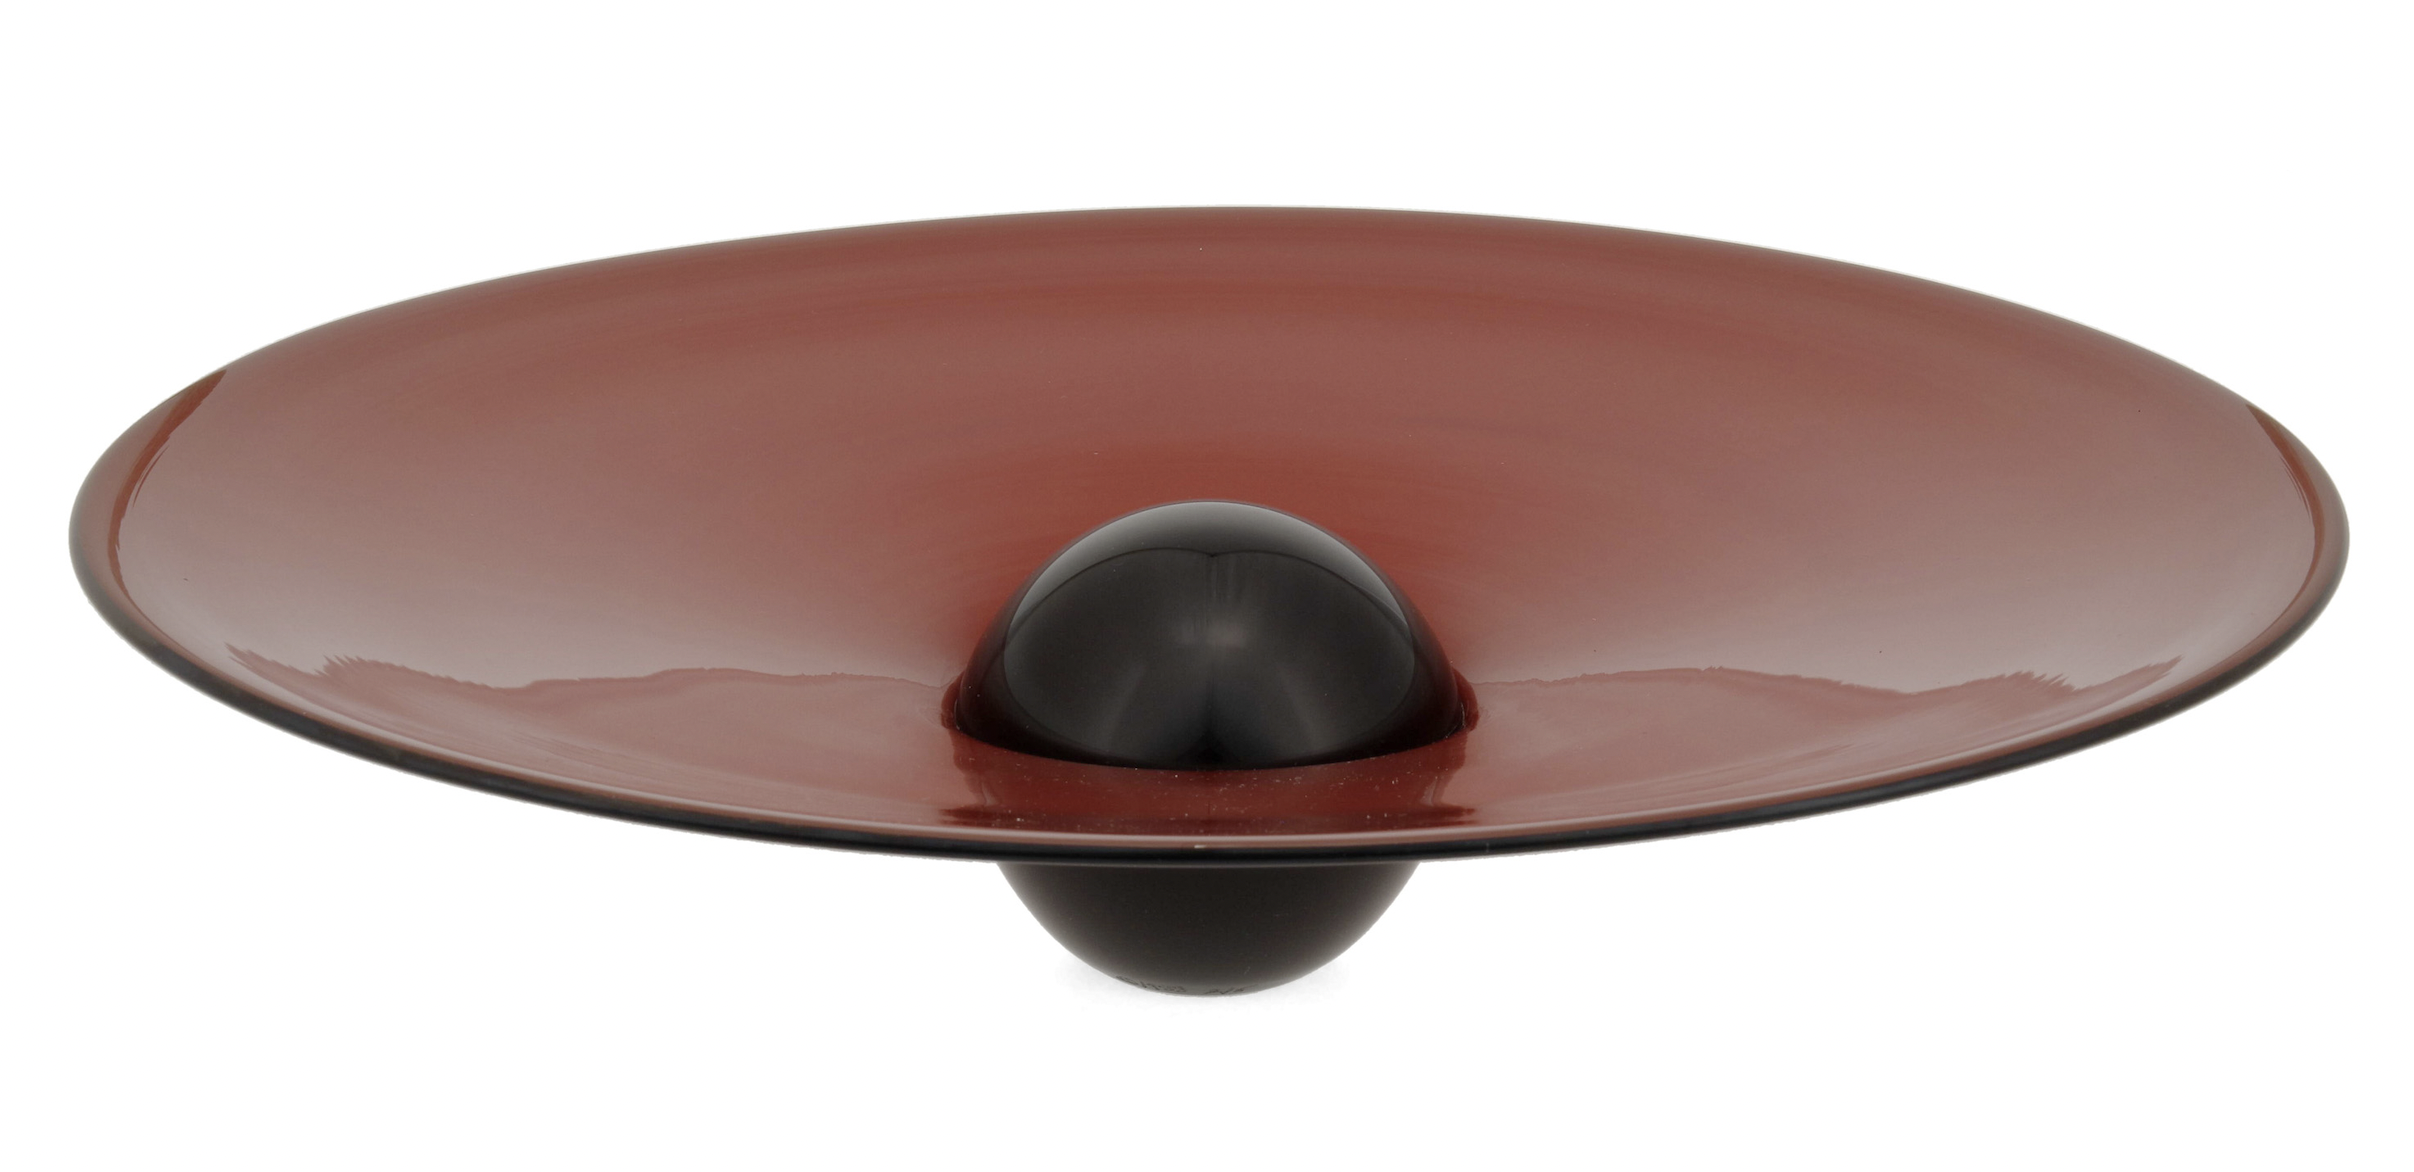 Benjamin Moore ‘Palla Series’ red and black bowl, est. $800-$1,200  